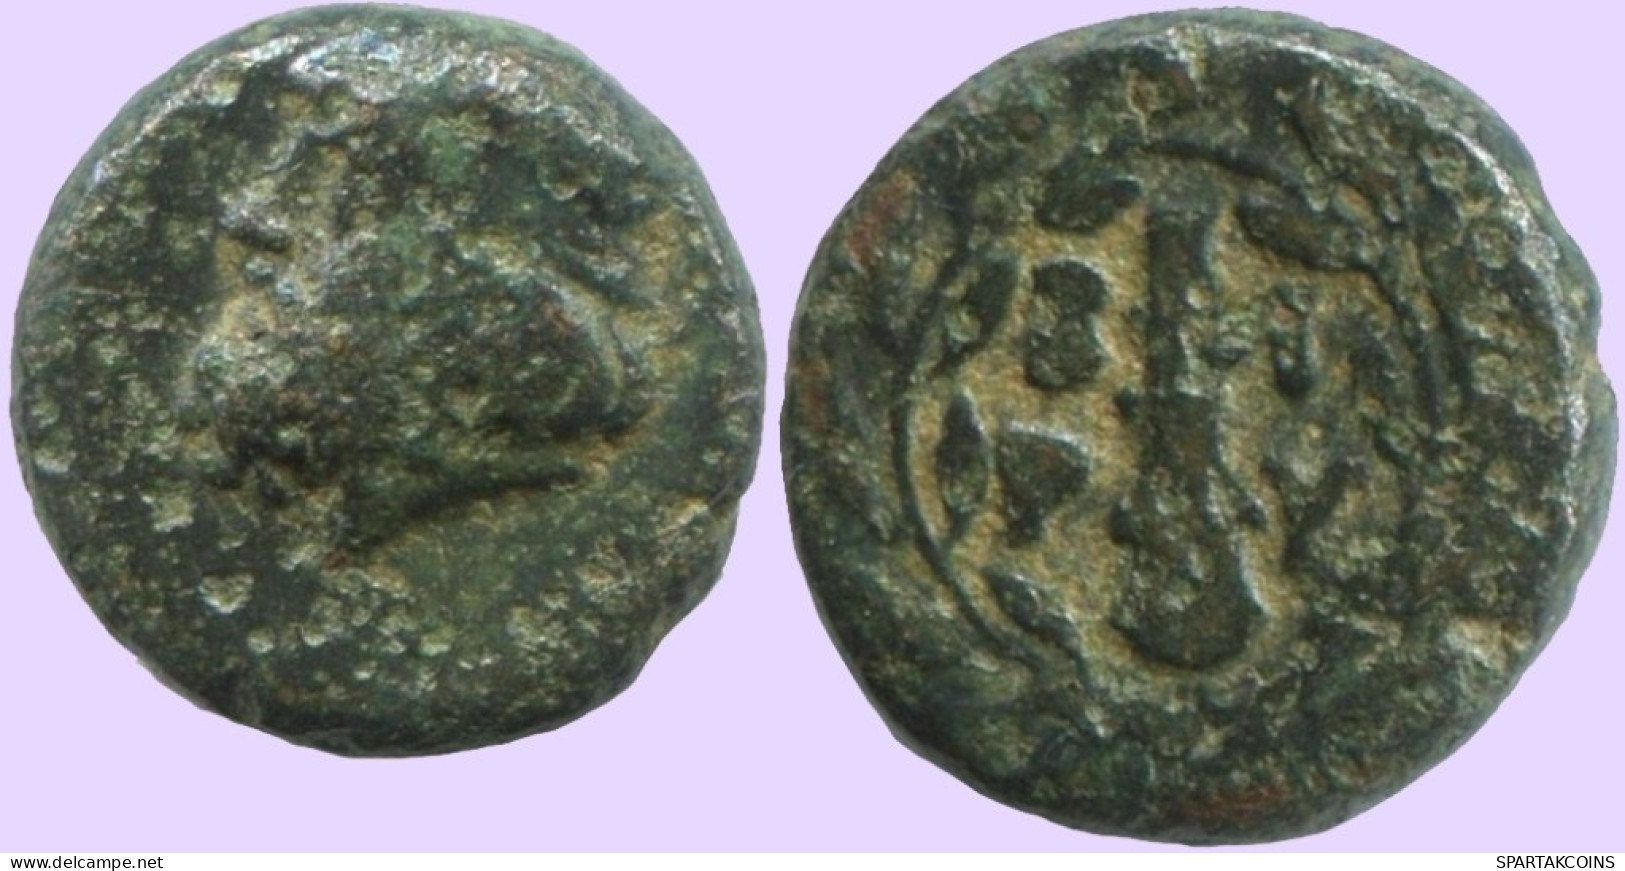 WREATH Ancient Authentic Original GREEK Coin 1.4g/10mm #ANT1688.10.U.A - Greek